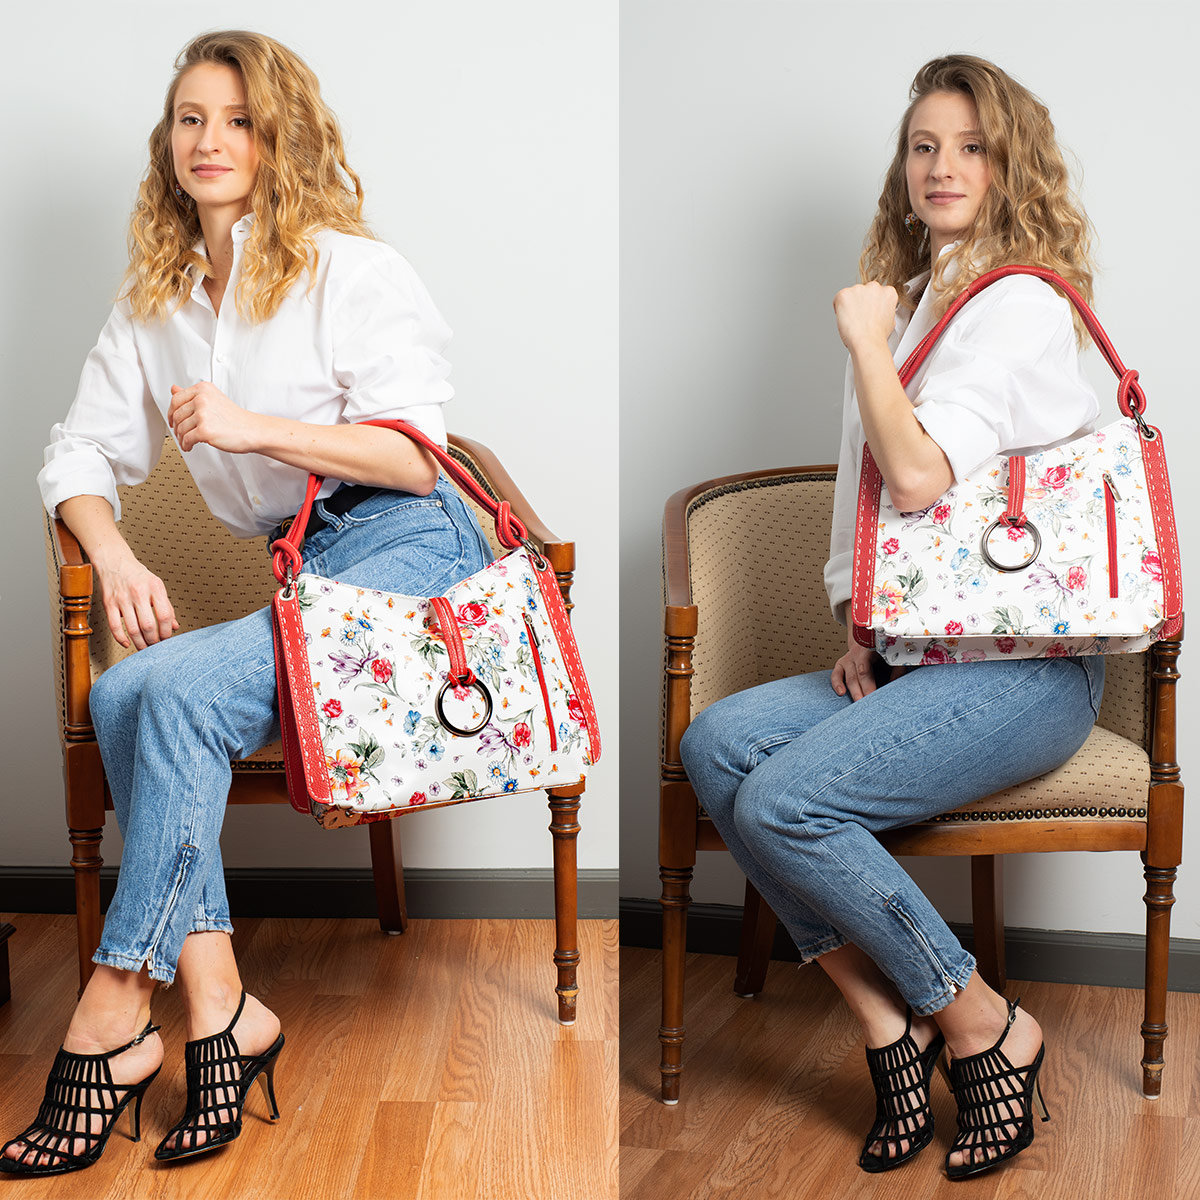 Fioretta Italian Genuine Leather Flower Pattern Zippered Top Tote Shoulder Bag Handbag For Women - Red